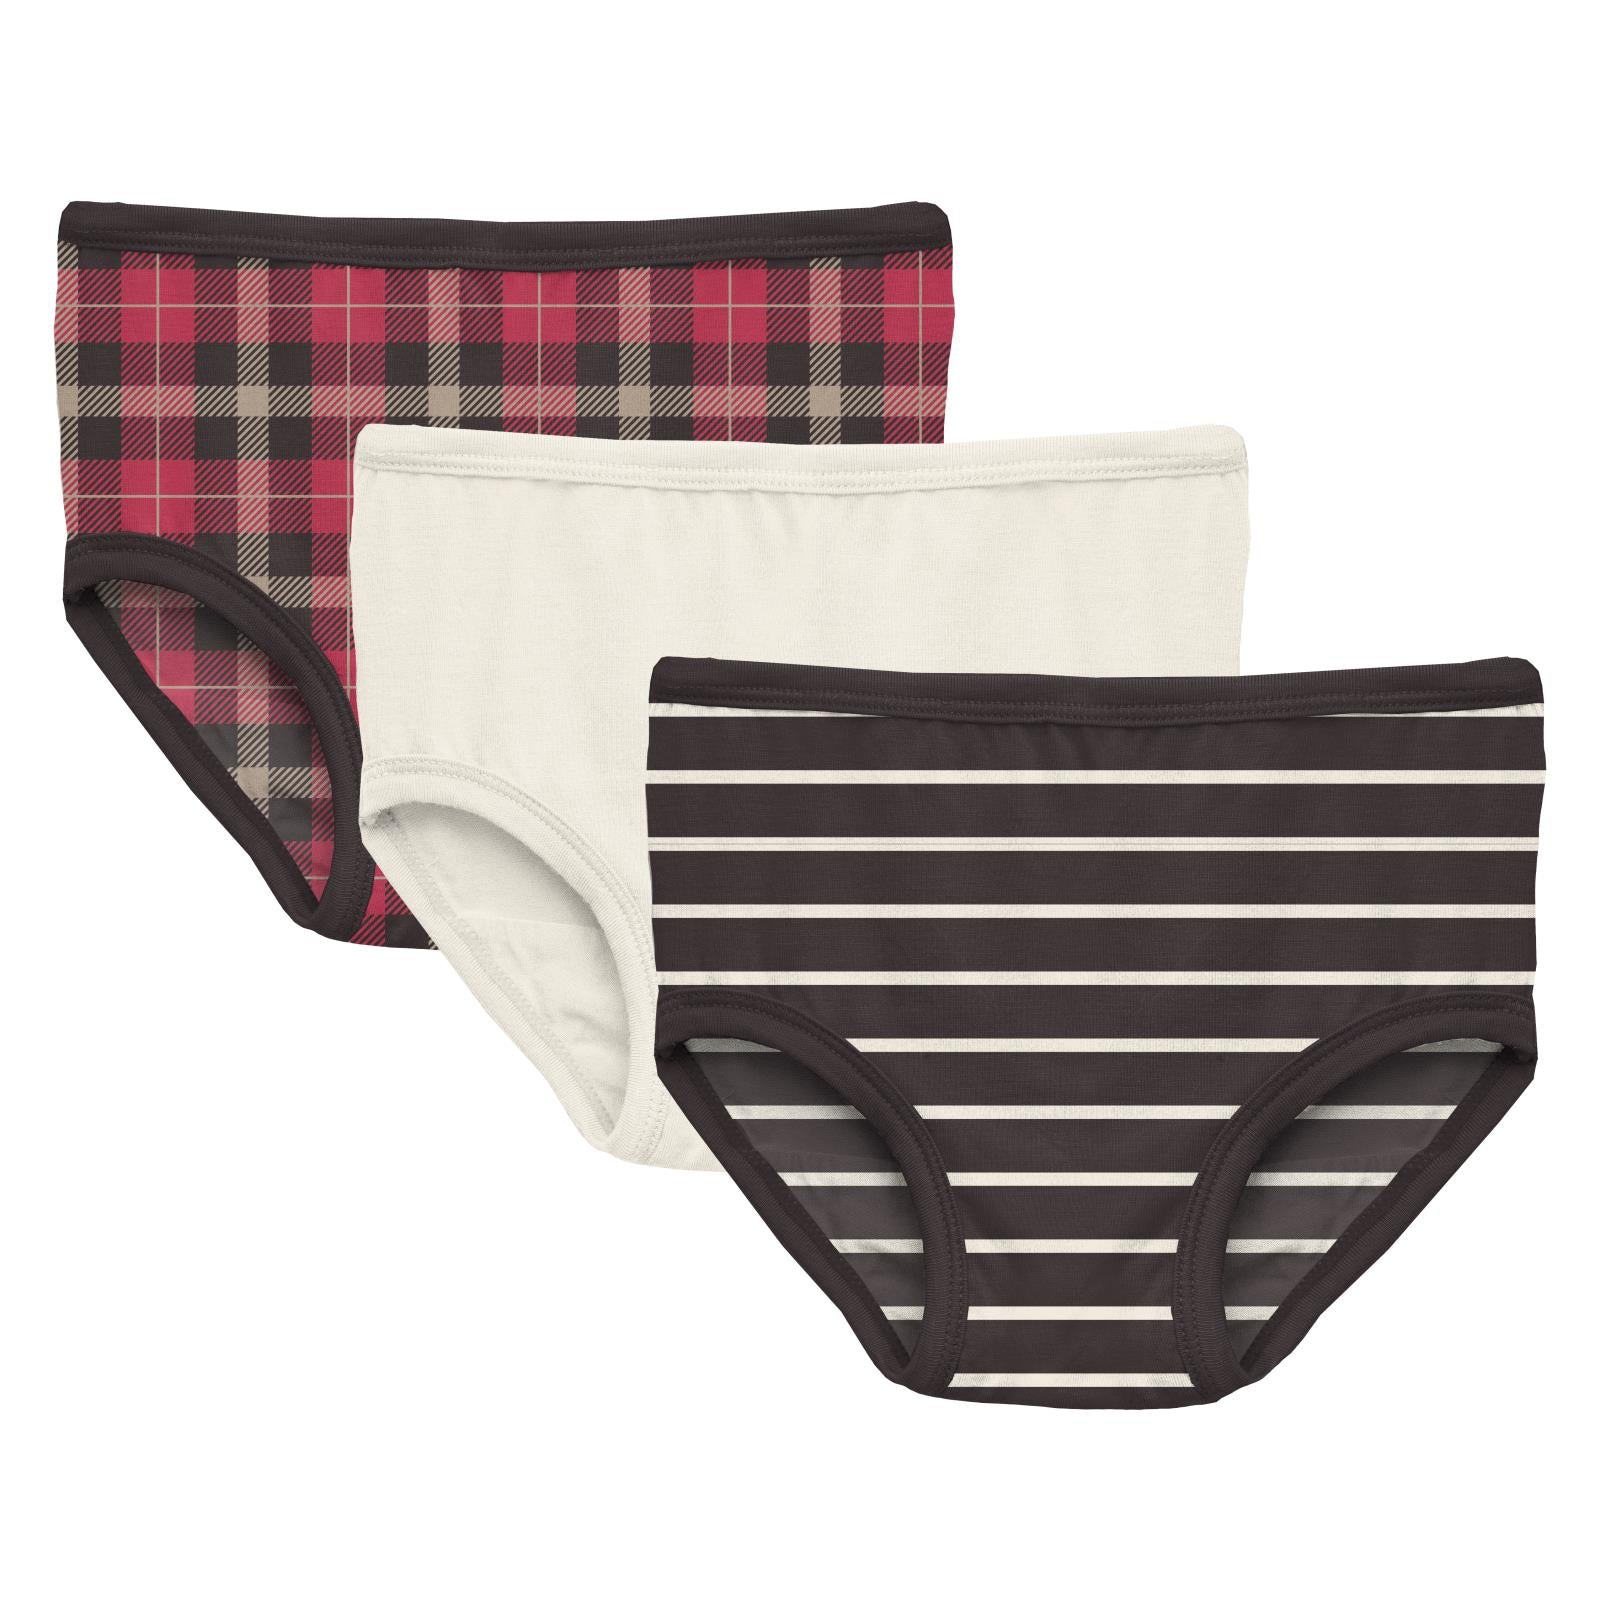 KicKee Pants Girls Print Underwear, Soft Girl Panties, Toddler to Big Kid,  All Day Wear